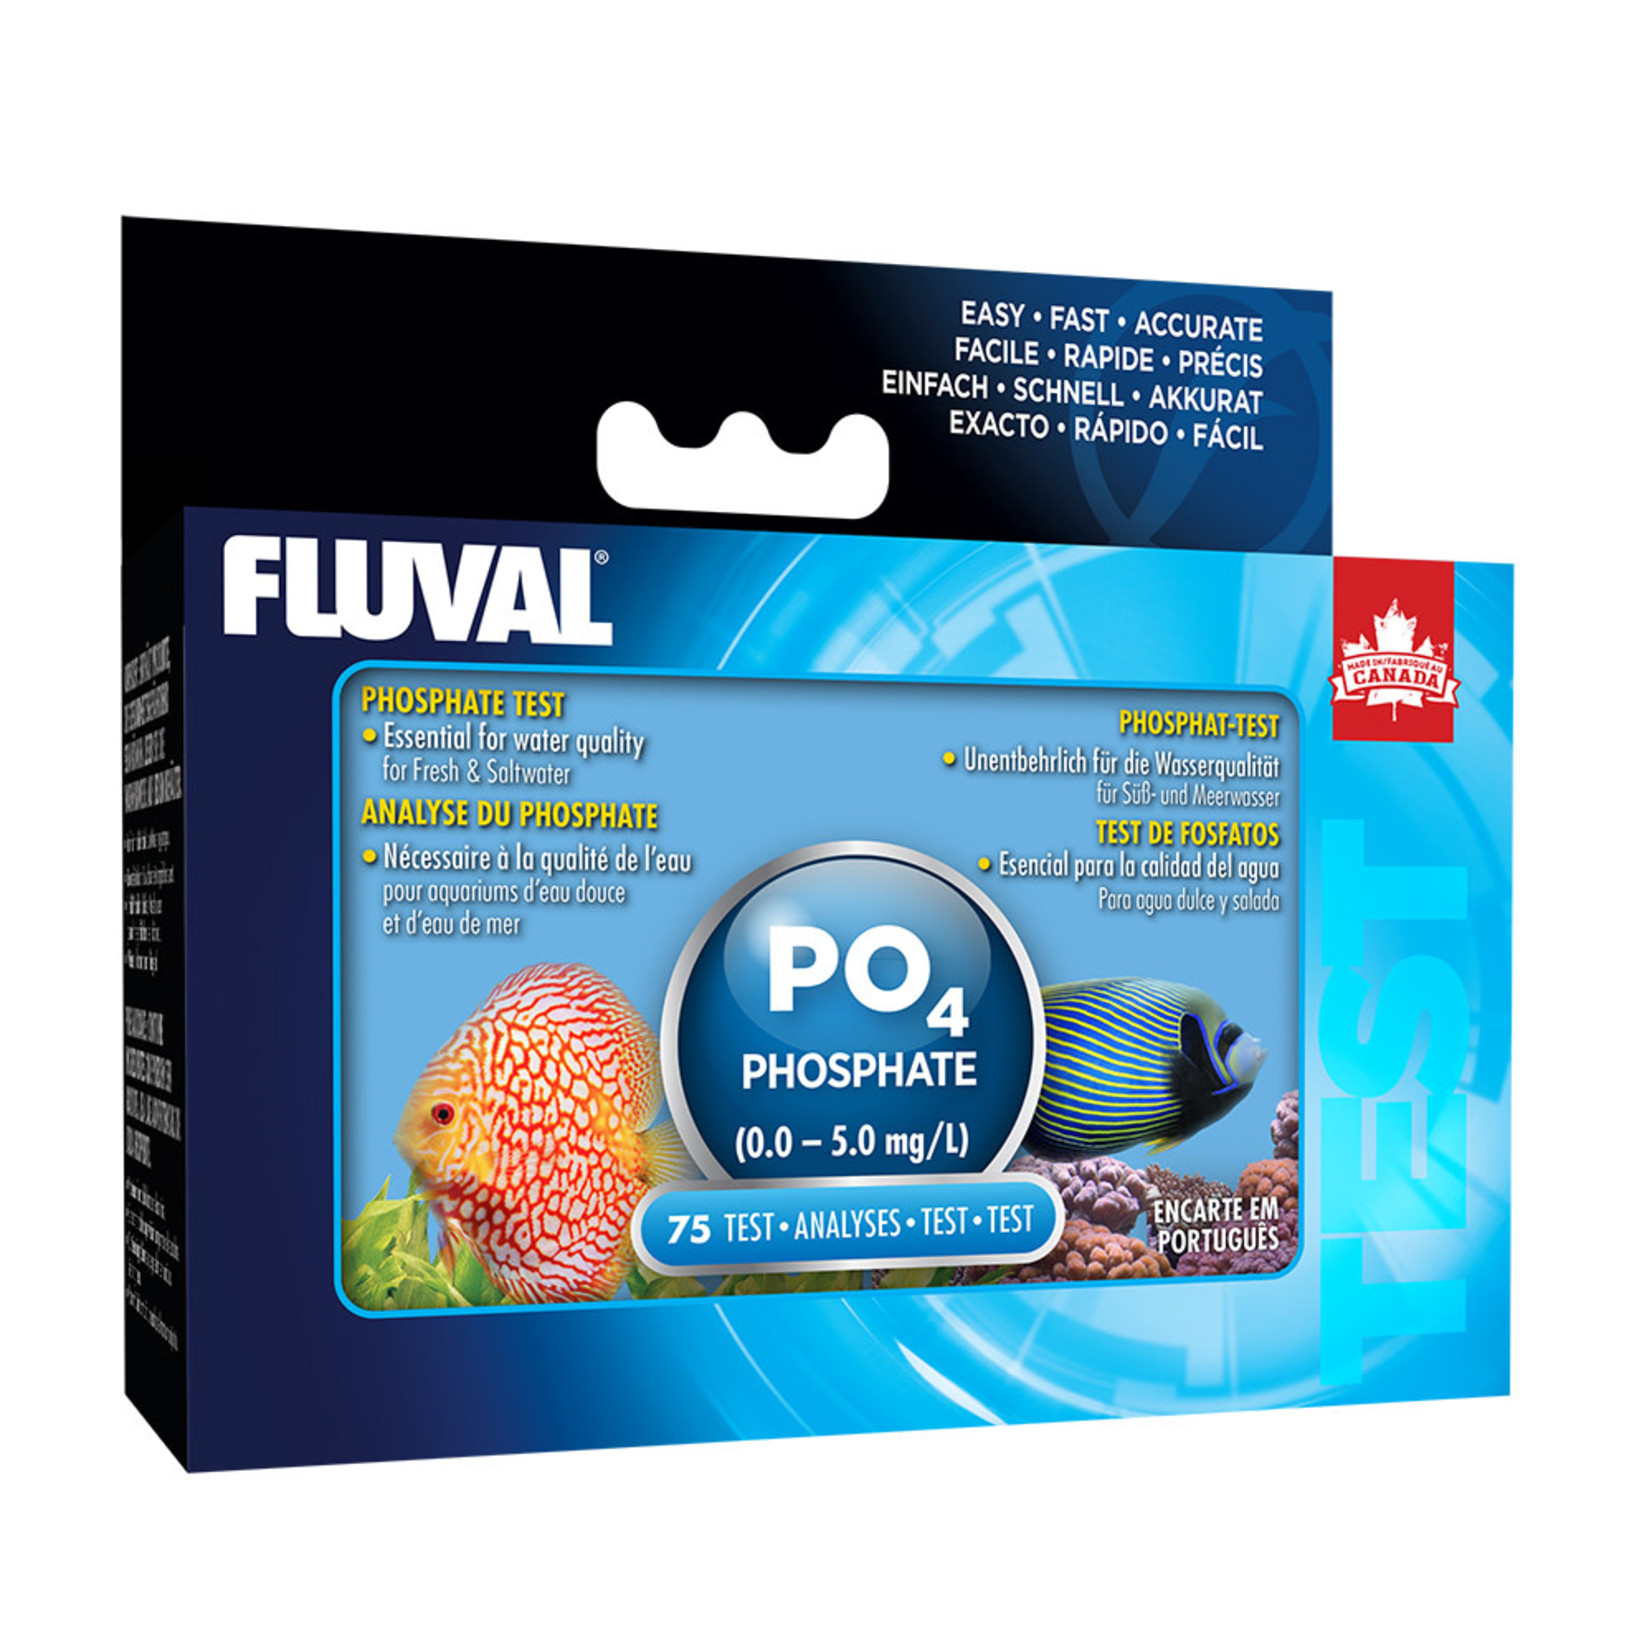 Fluval Phosphate (0.0-5.0 mg/l) for Fresh & Saltwater, 75 tests